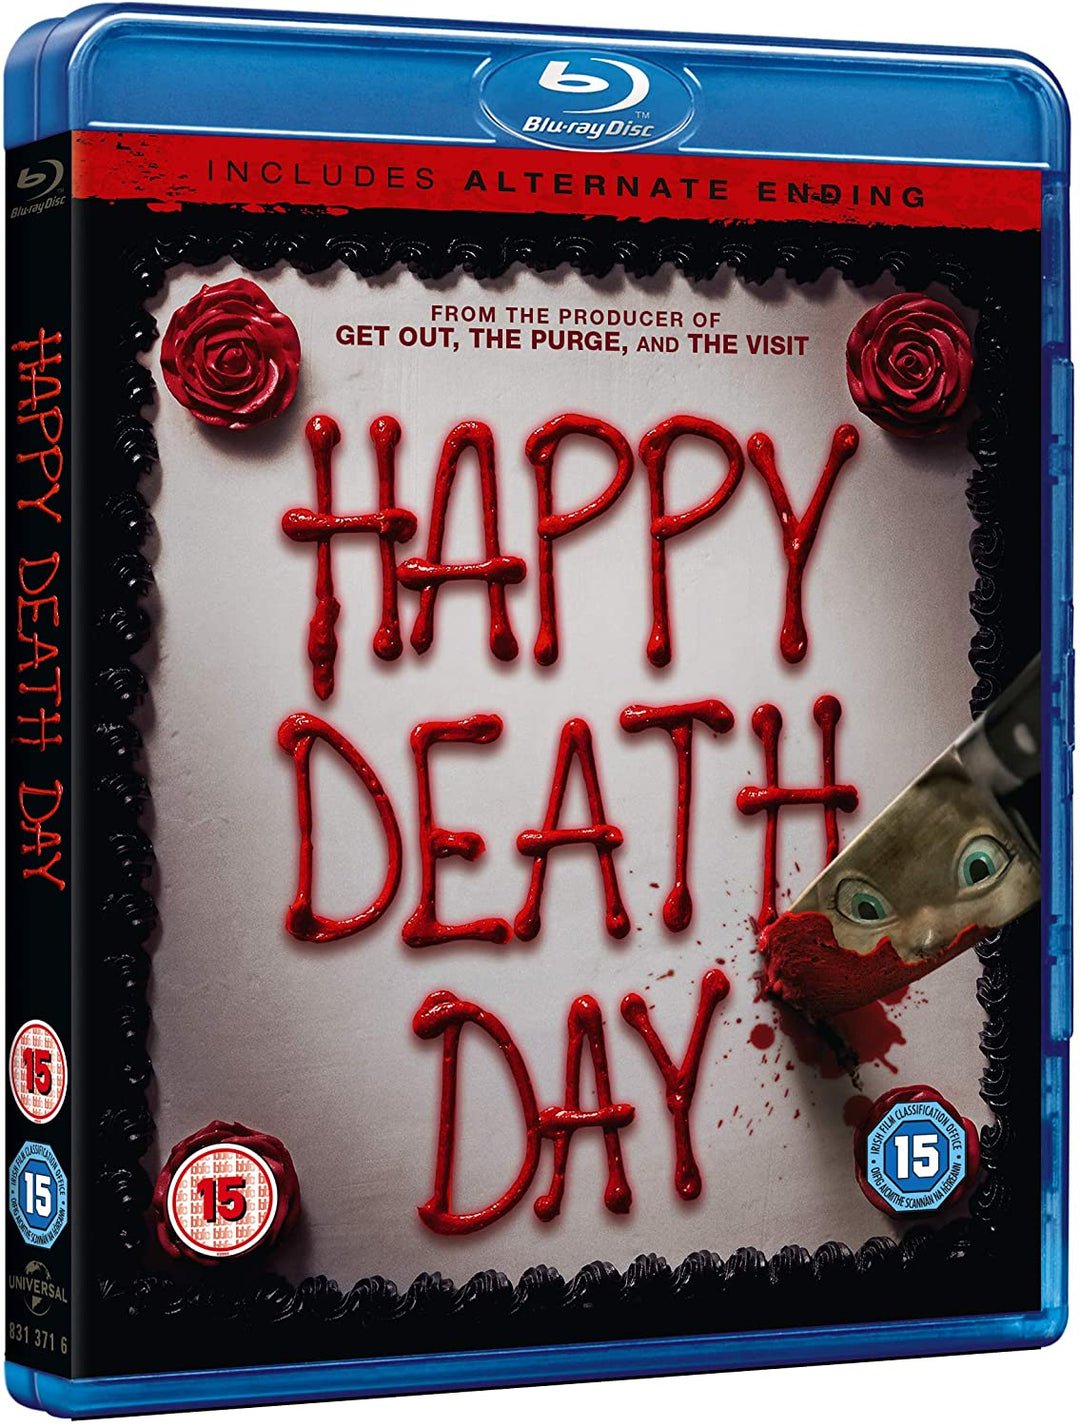 Happy Death day - Horror/Thriller [Blu-ray]